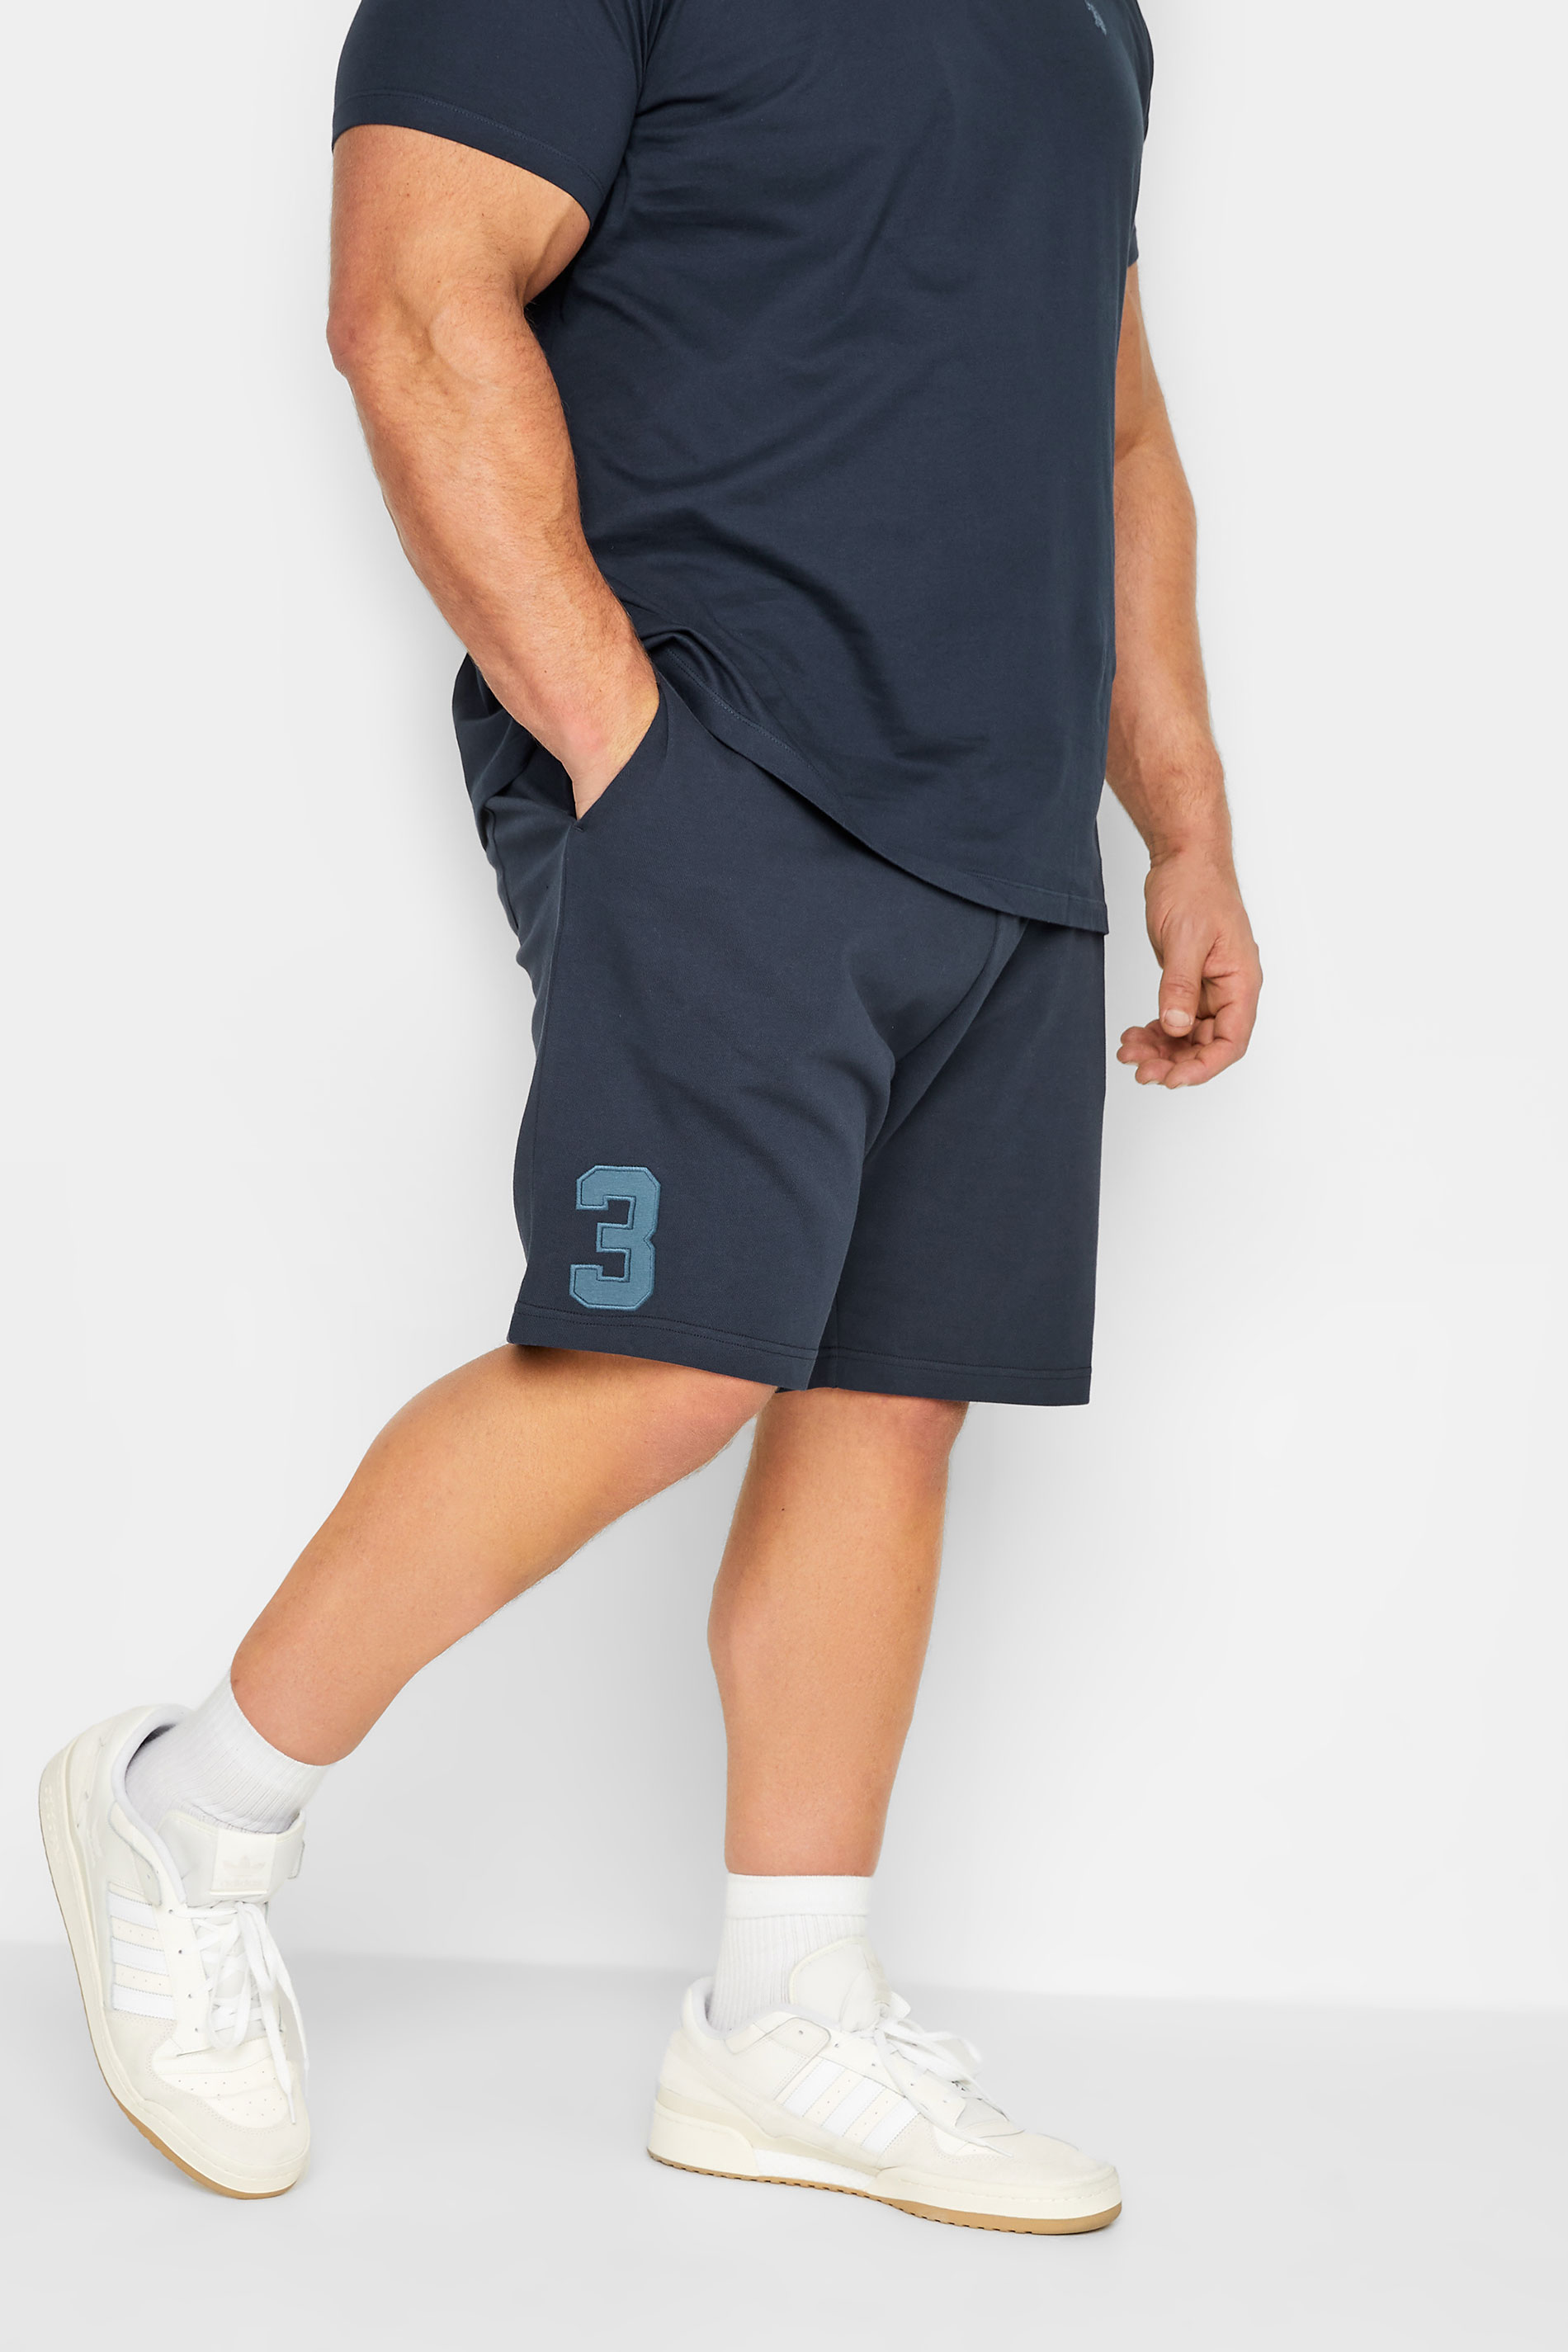 U.S. POLO ASSN. Big & Tall Navy Blue Jersey Shorts | BadRhino  1